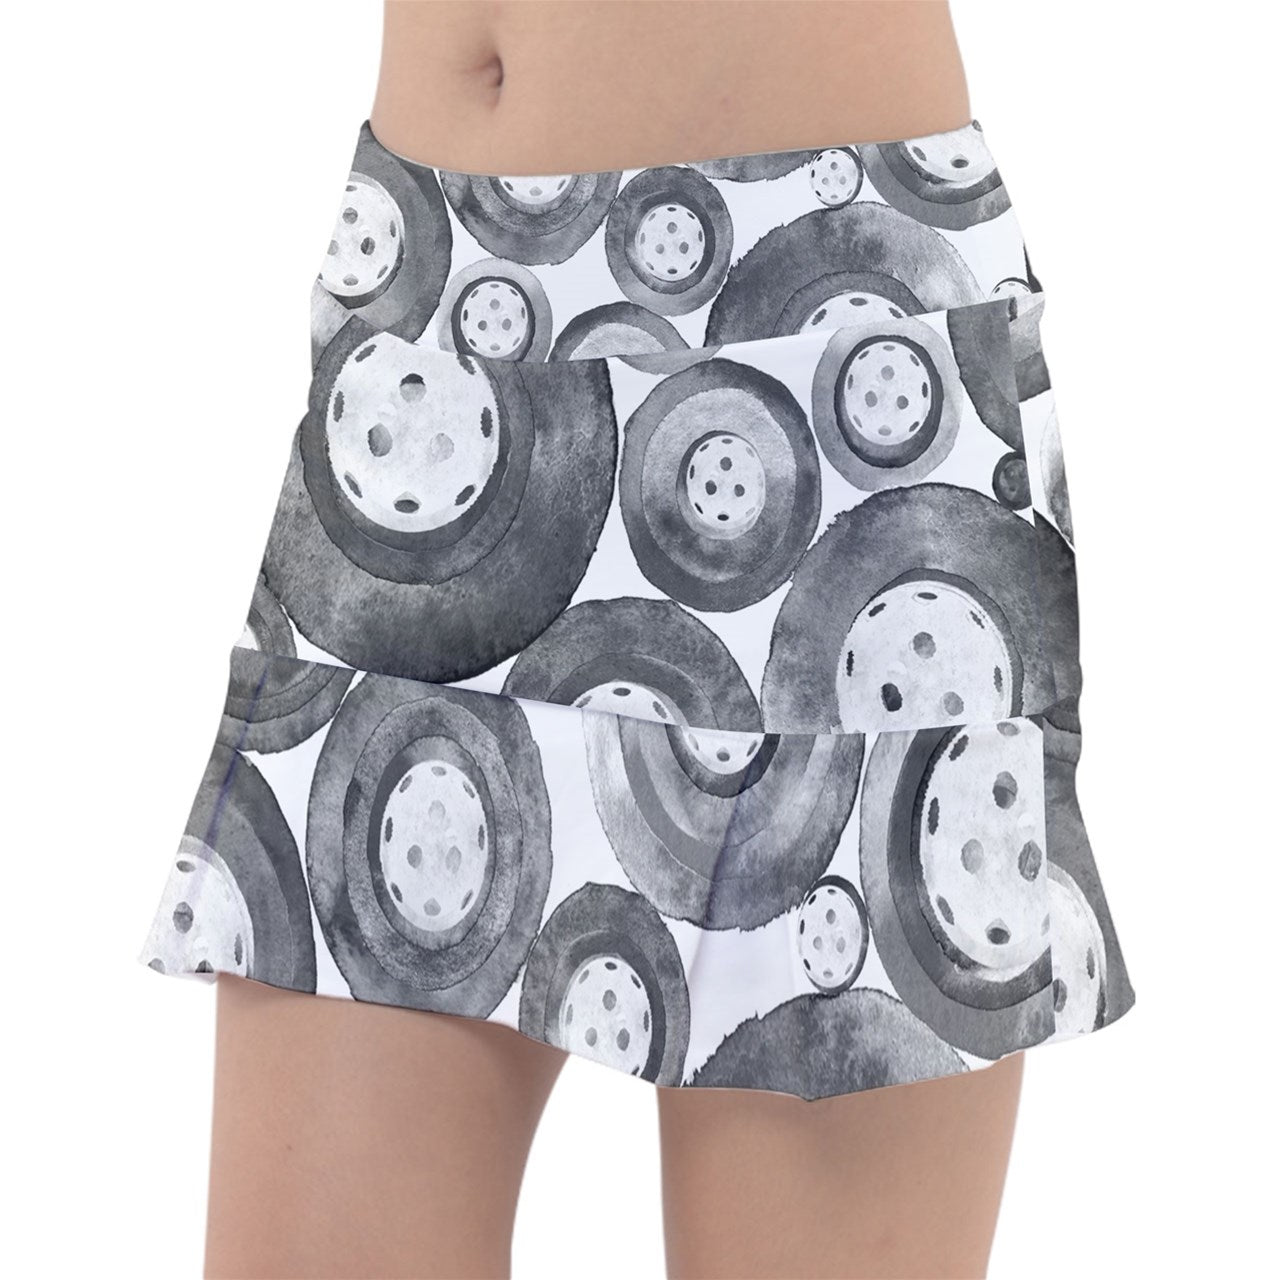 Dizzy Pickle Heidi BKW Main Classic Women's Pickleball Pleated Skorts with Inner Shorts & Pockets